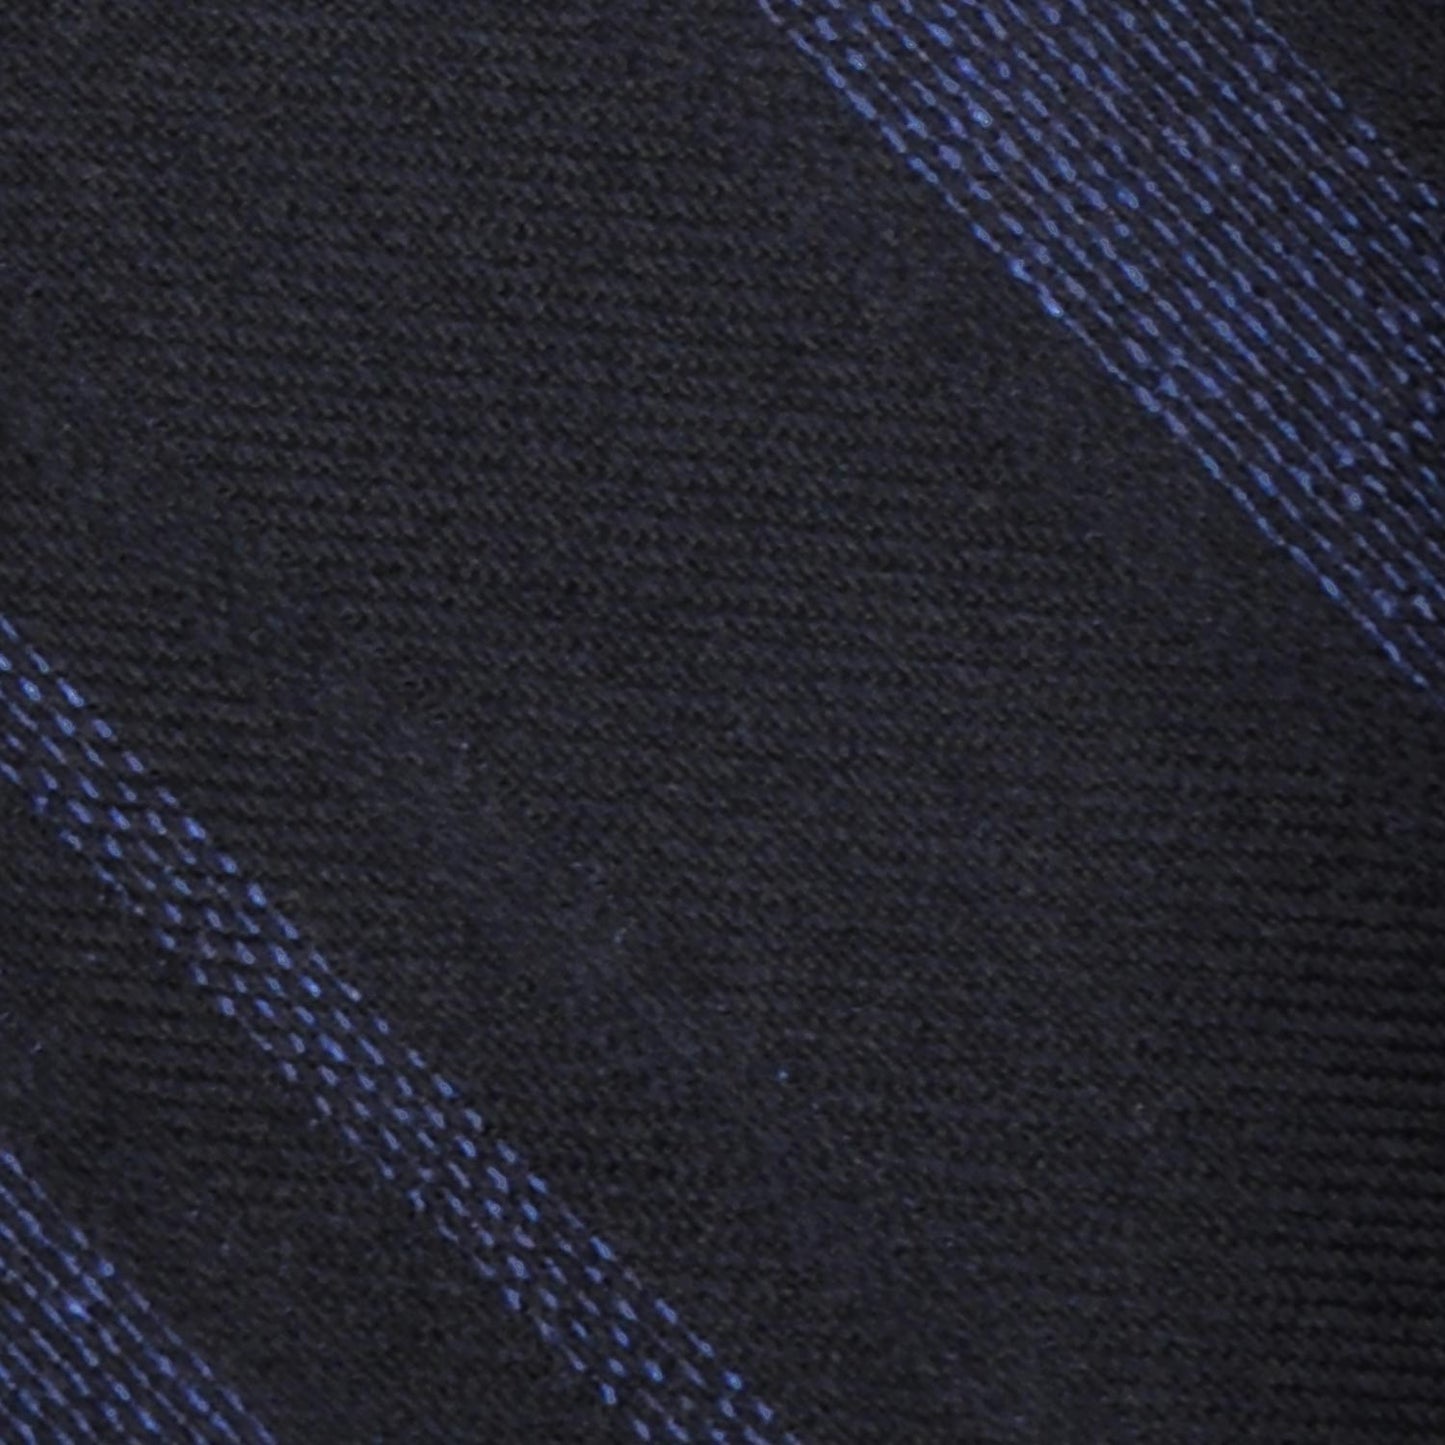 Navy Blue Silk Wool Striped Tie. Elegant regimental necktie made with silk and wool, hand rolled edge, unlined 3 folds, navy blue background with denim blue striped